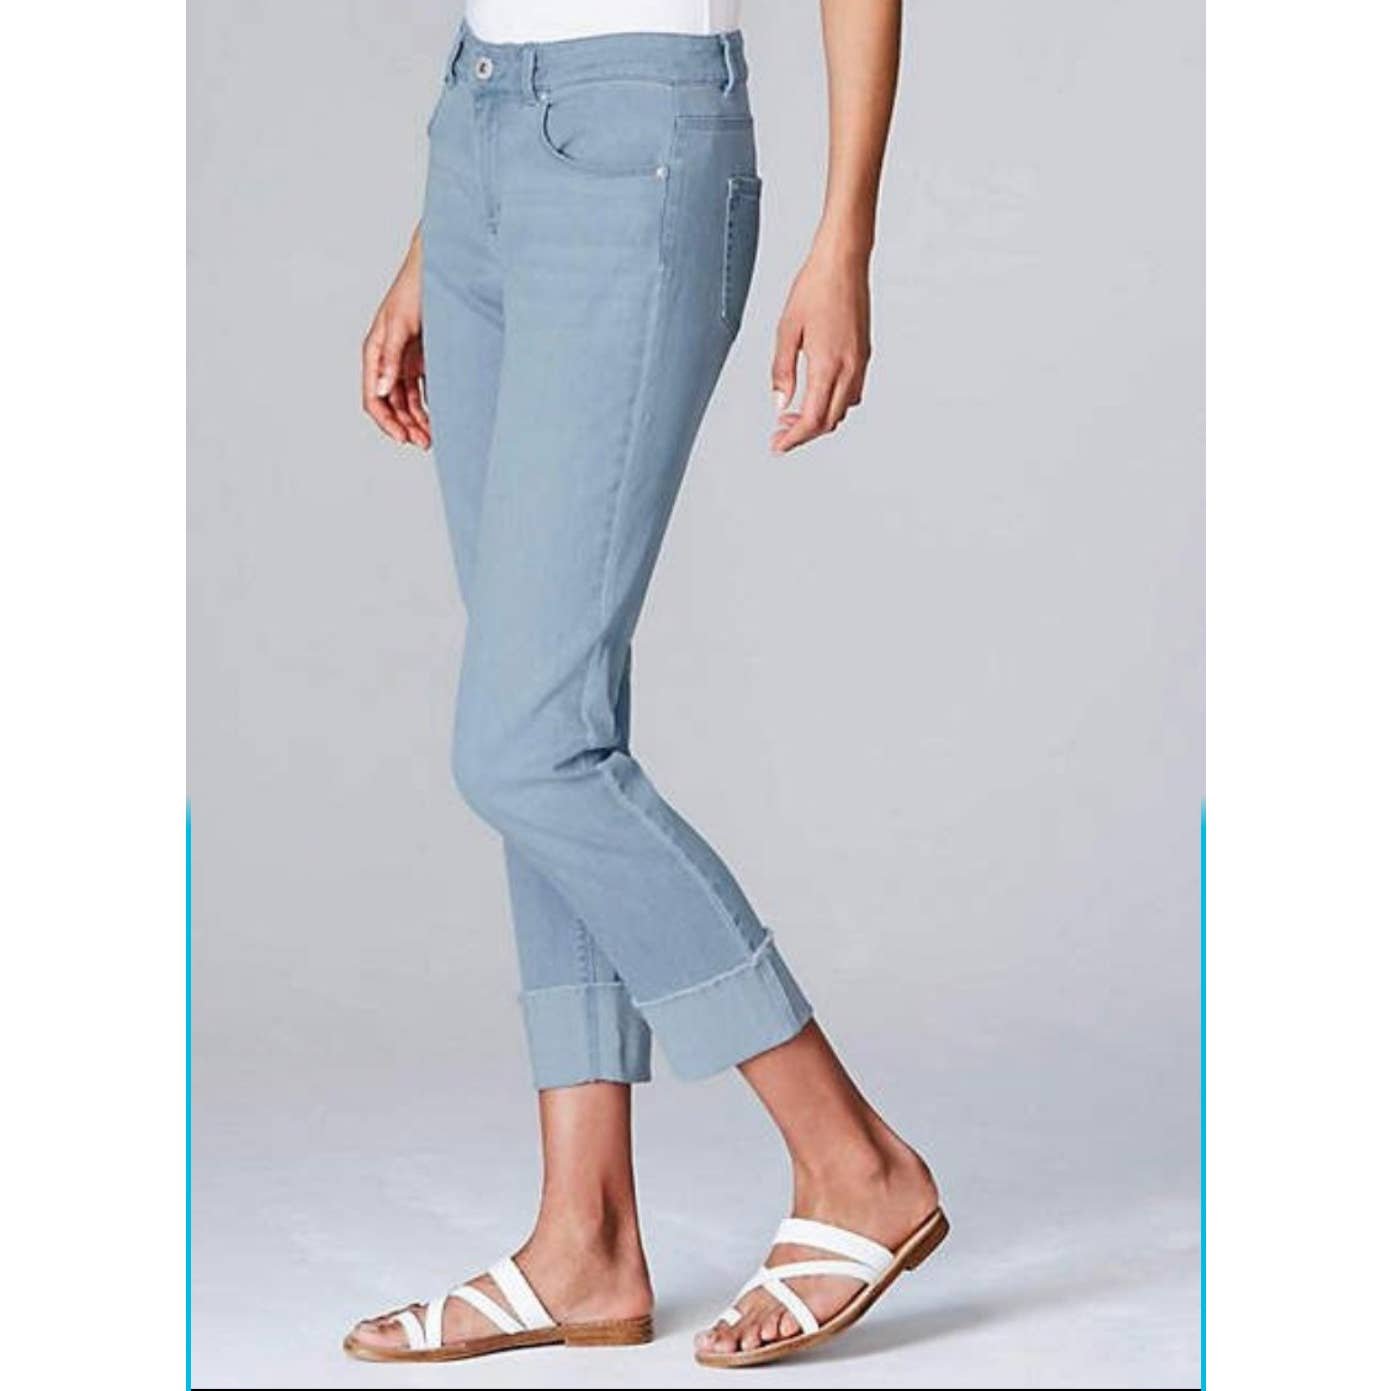 Comfortable J. Jill Denim Authentic Fit Cropped Jeans size 10 pcP4rI73L Fashion